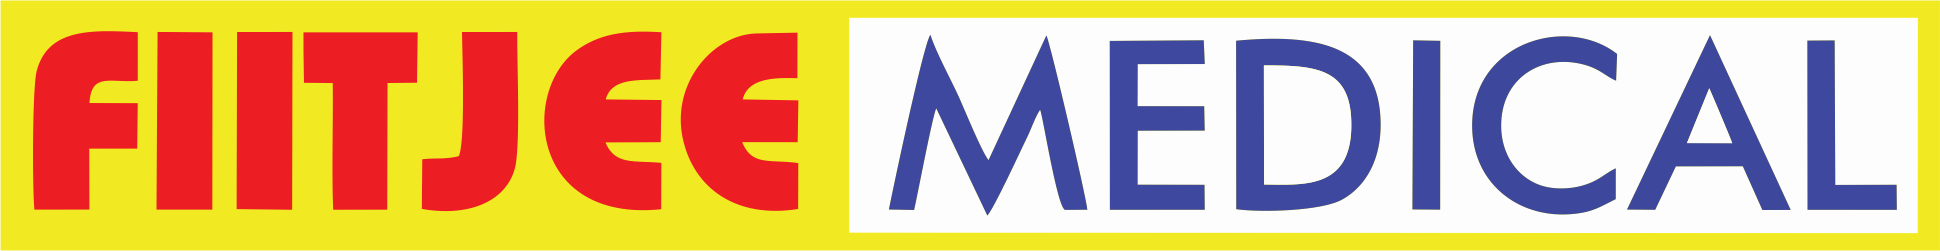 FIITJEE medical Logo